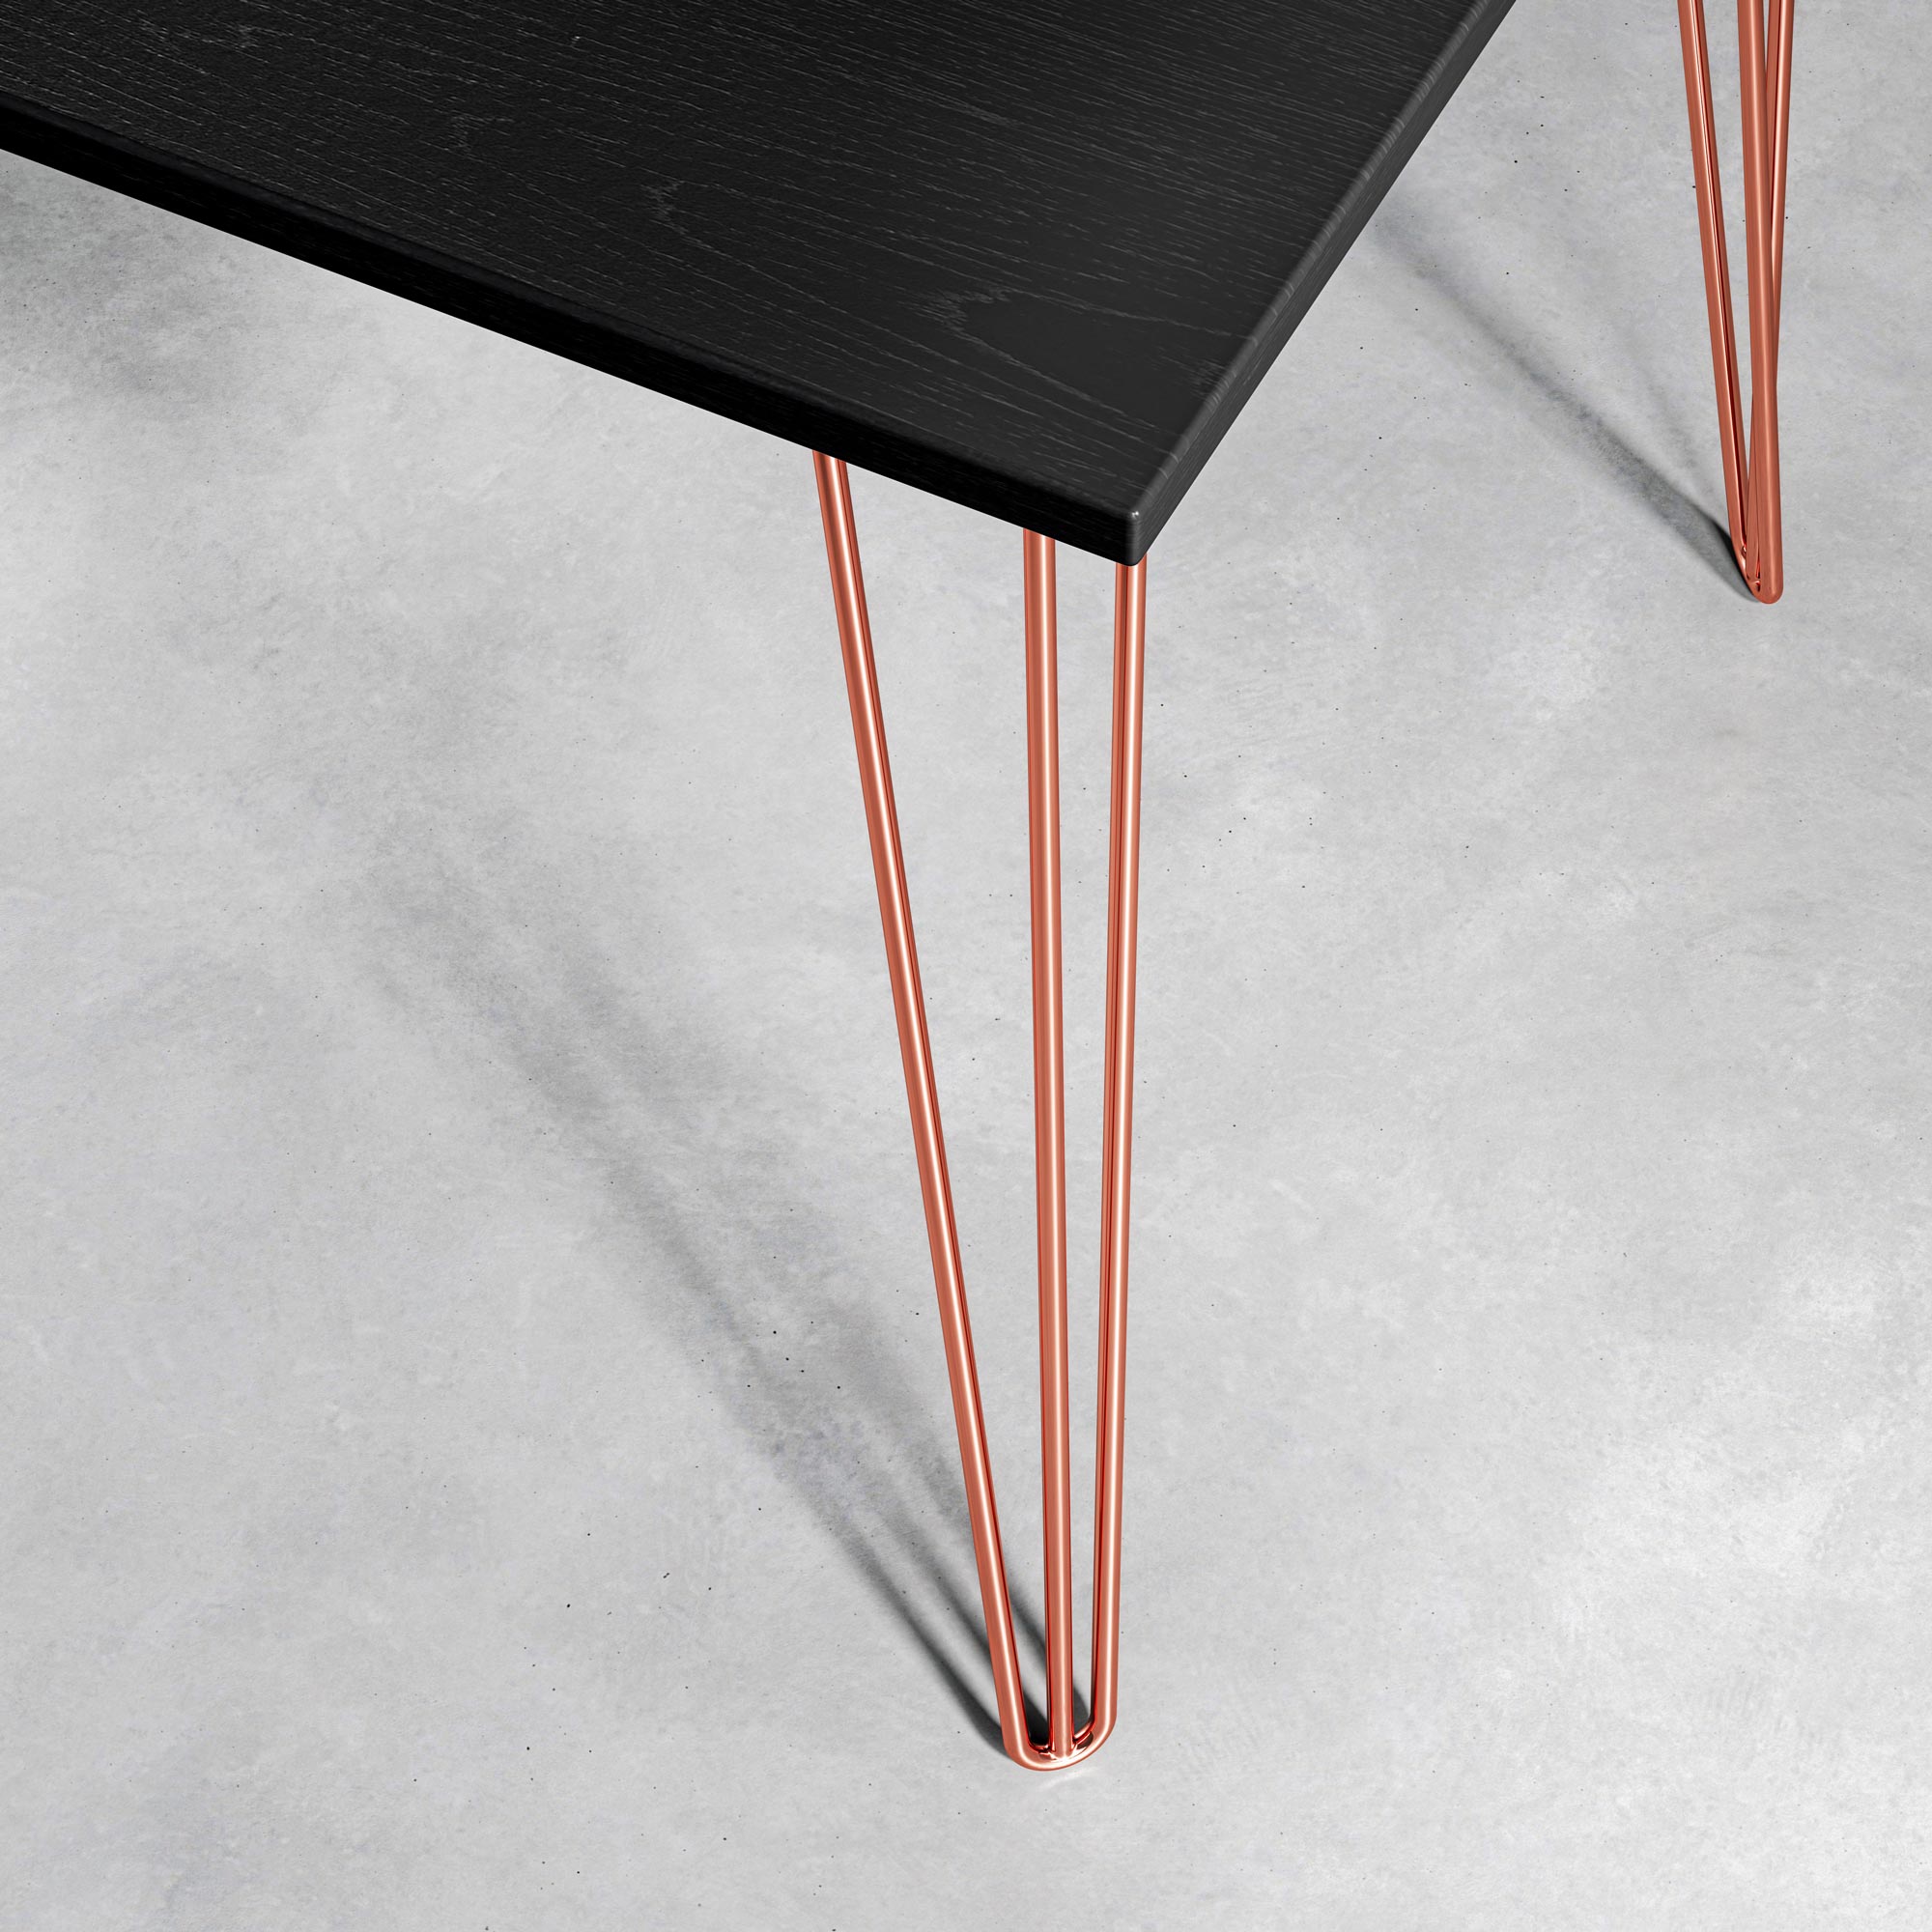 Black Ash Hairpin Table-Small (60cm x 120cm)-Copper-The Hairpin Leg Co.